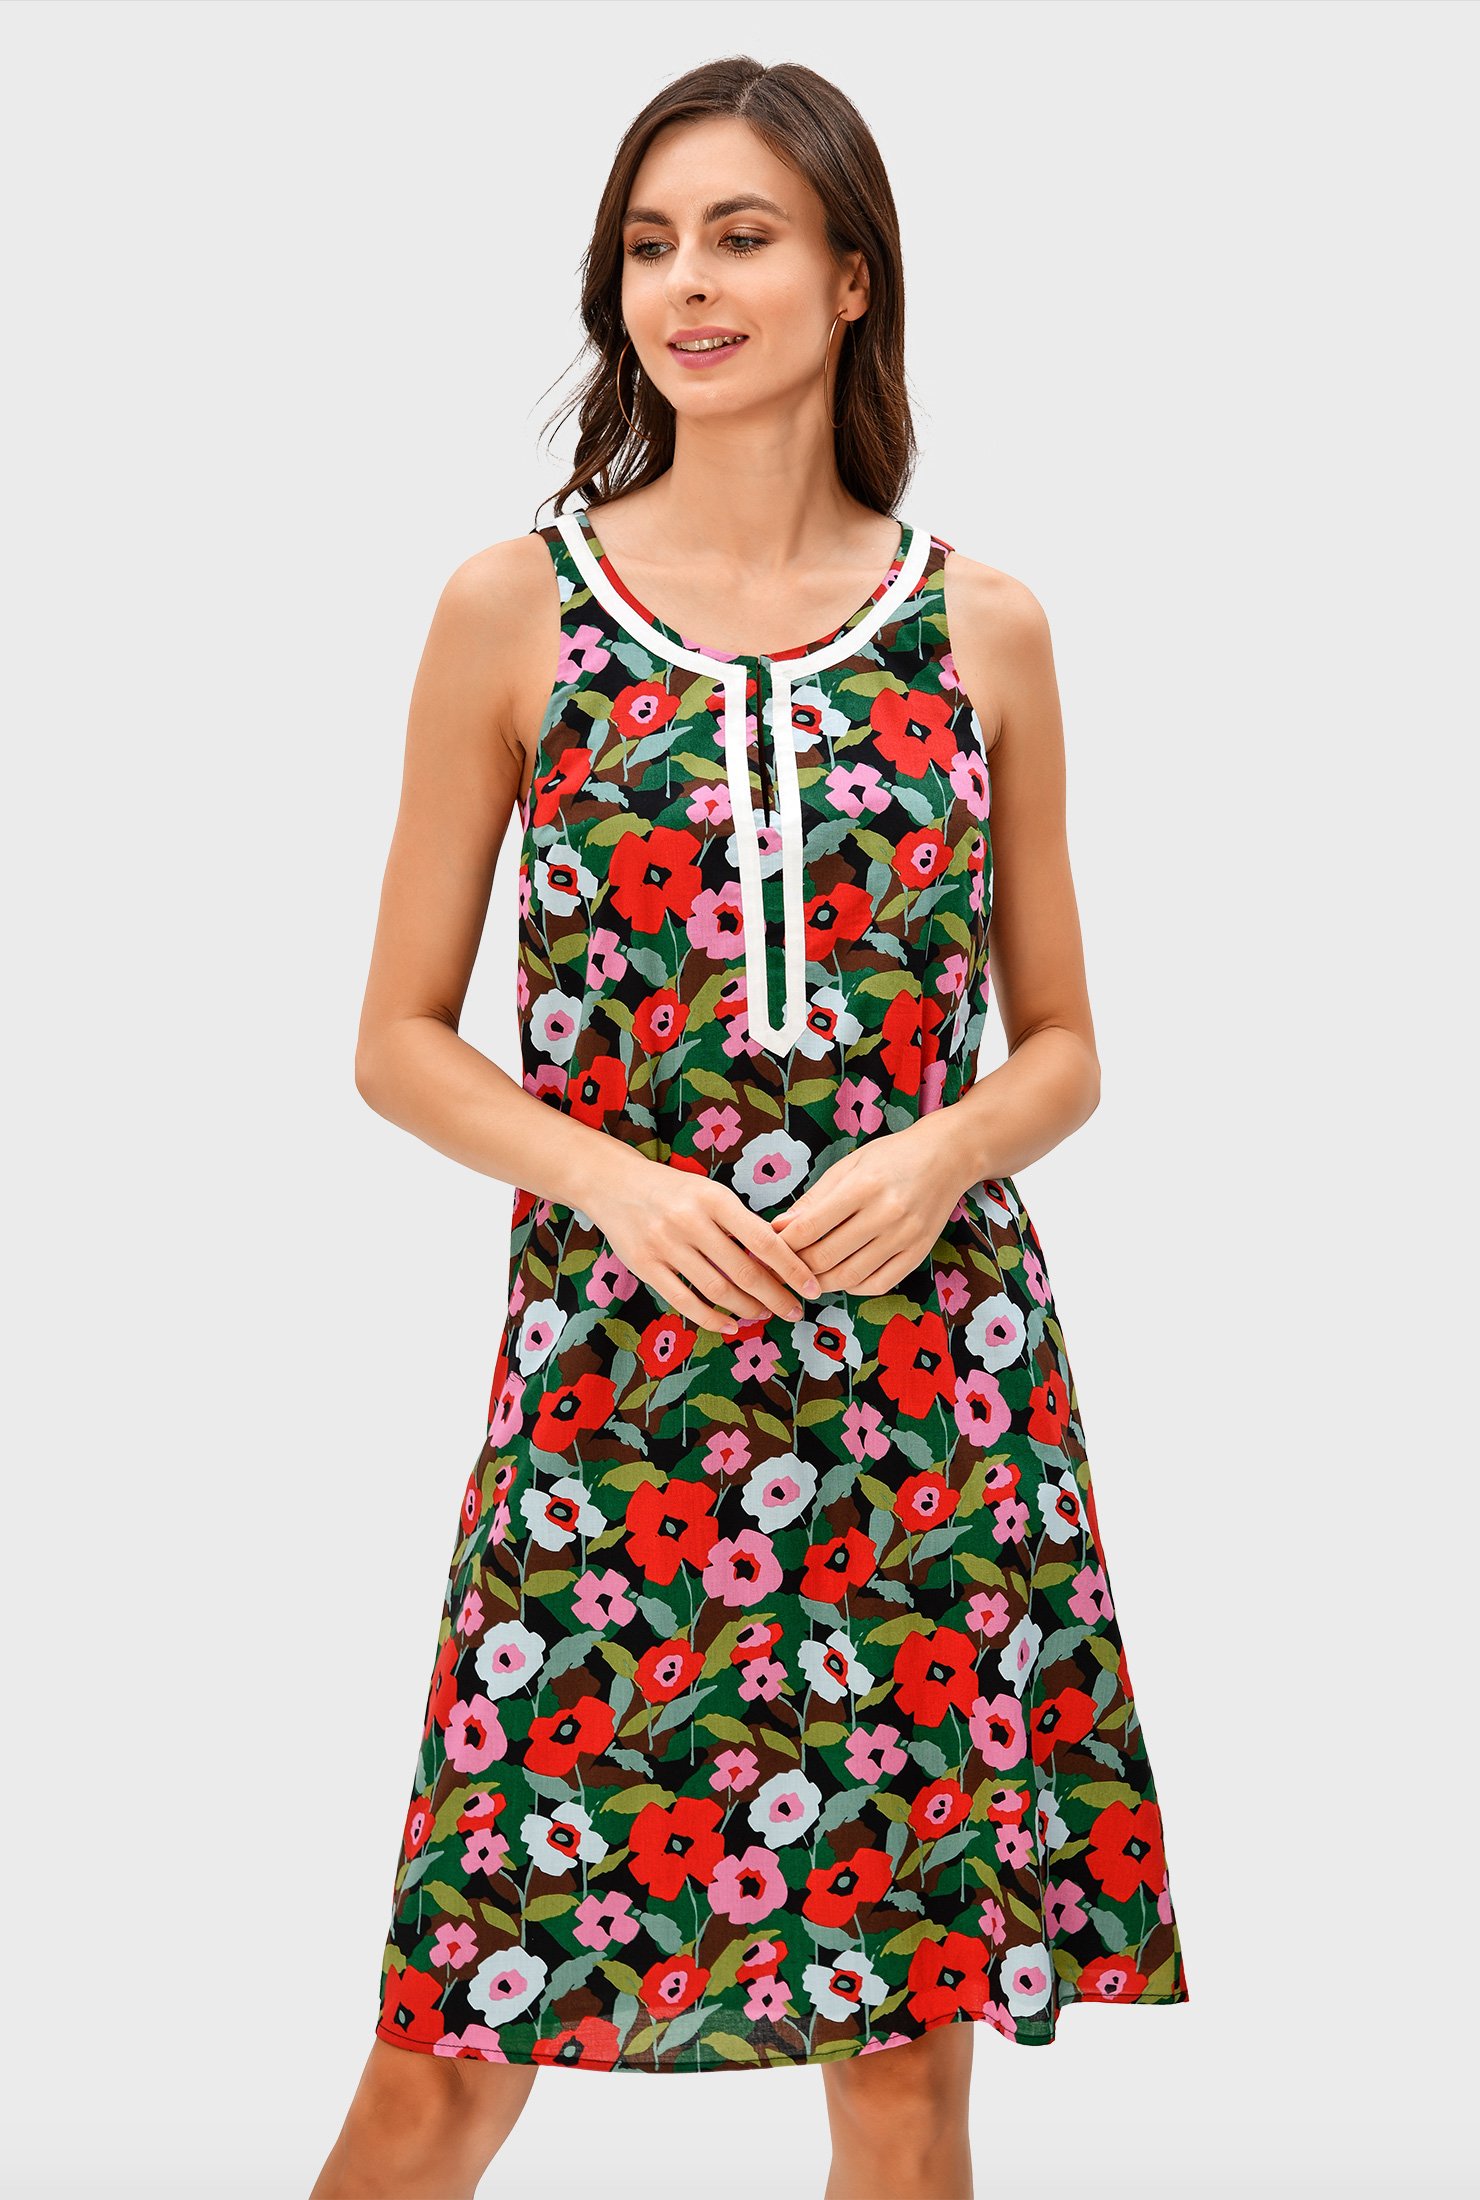 Ladies Sleeveless Floral Contrast Summer V Neck Midi Dress Size 8-22 NEW 